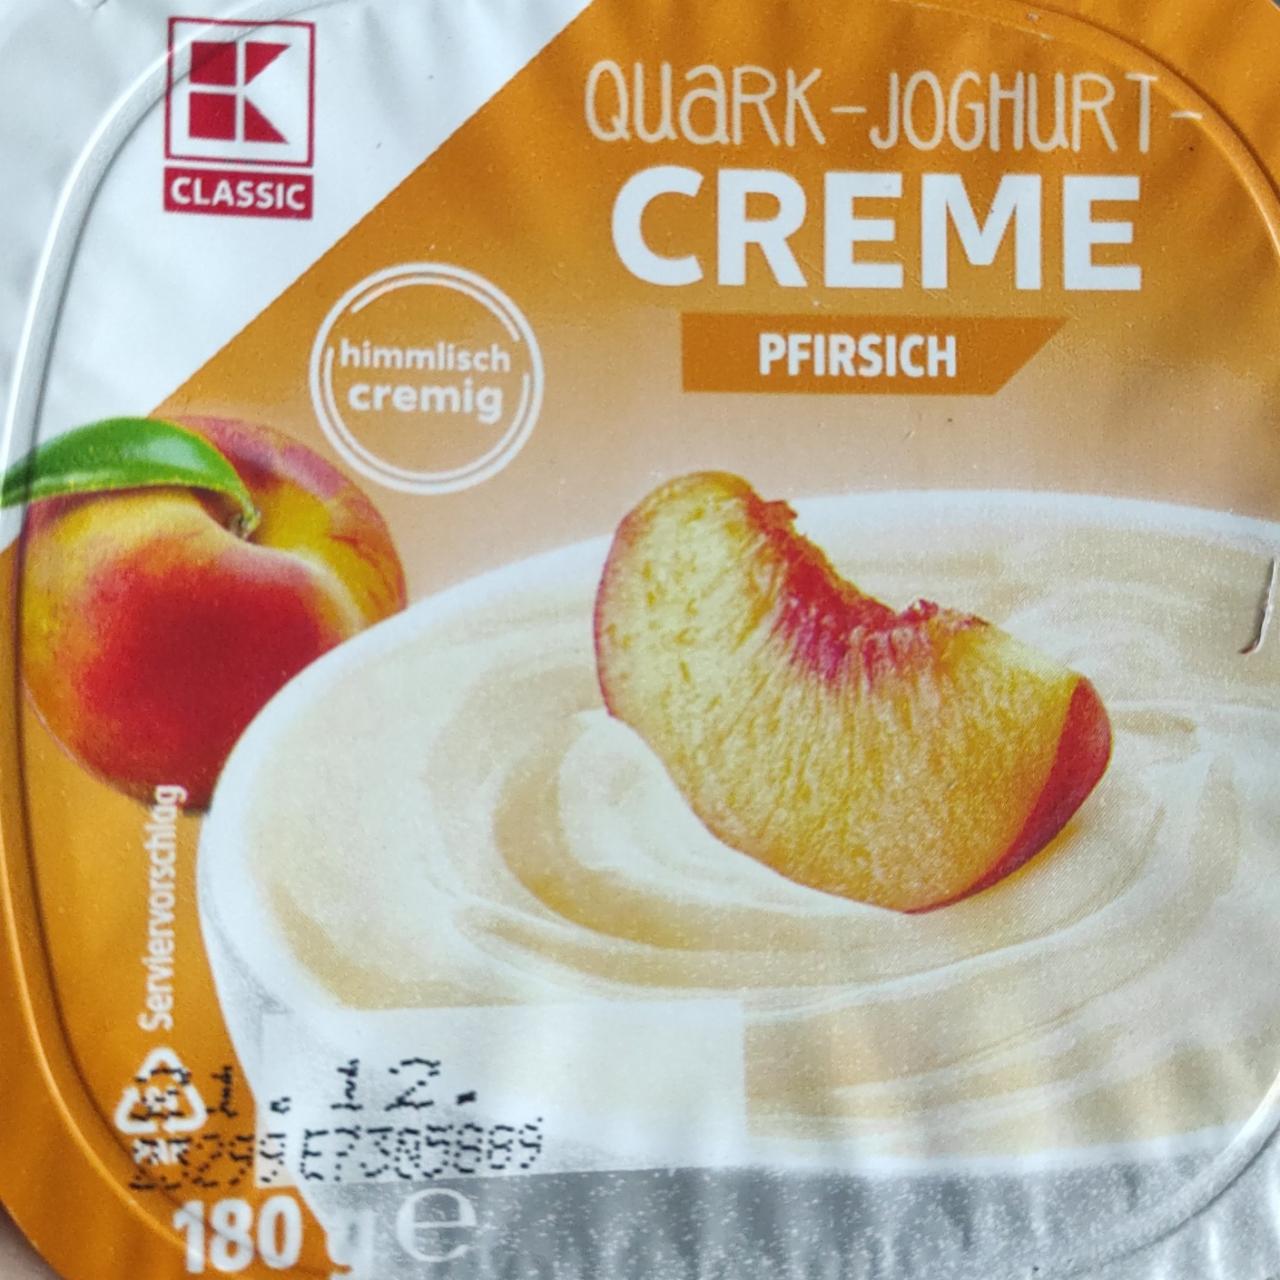 Fotografie - Quark-joghurt creme Pfirsich K-Classic